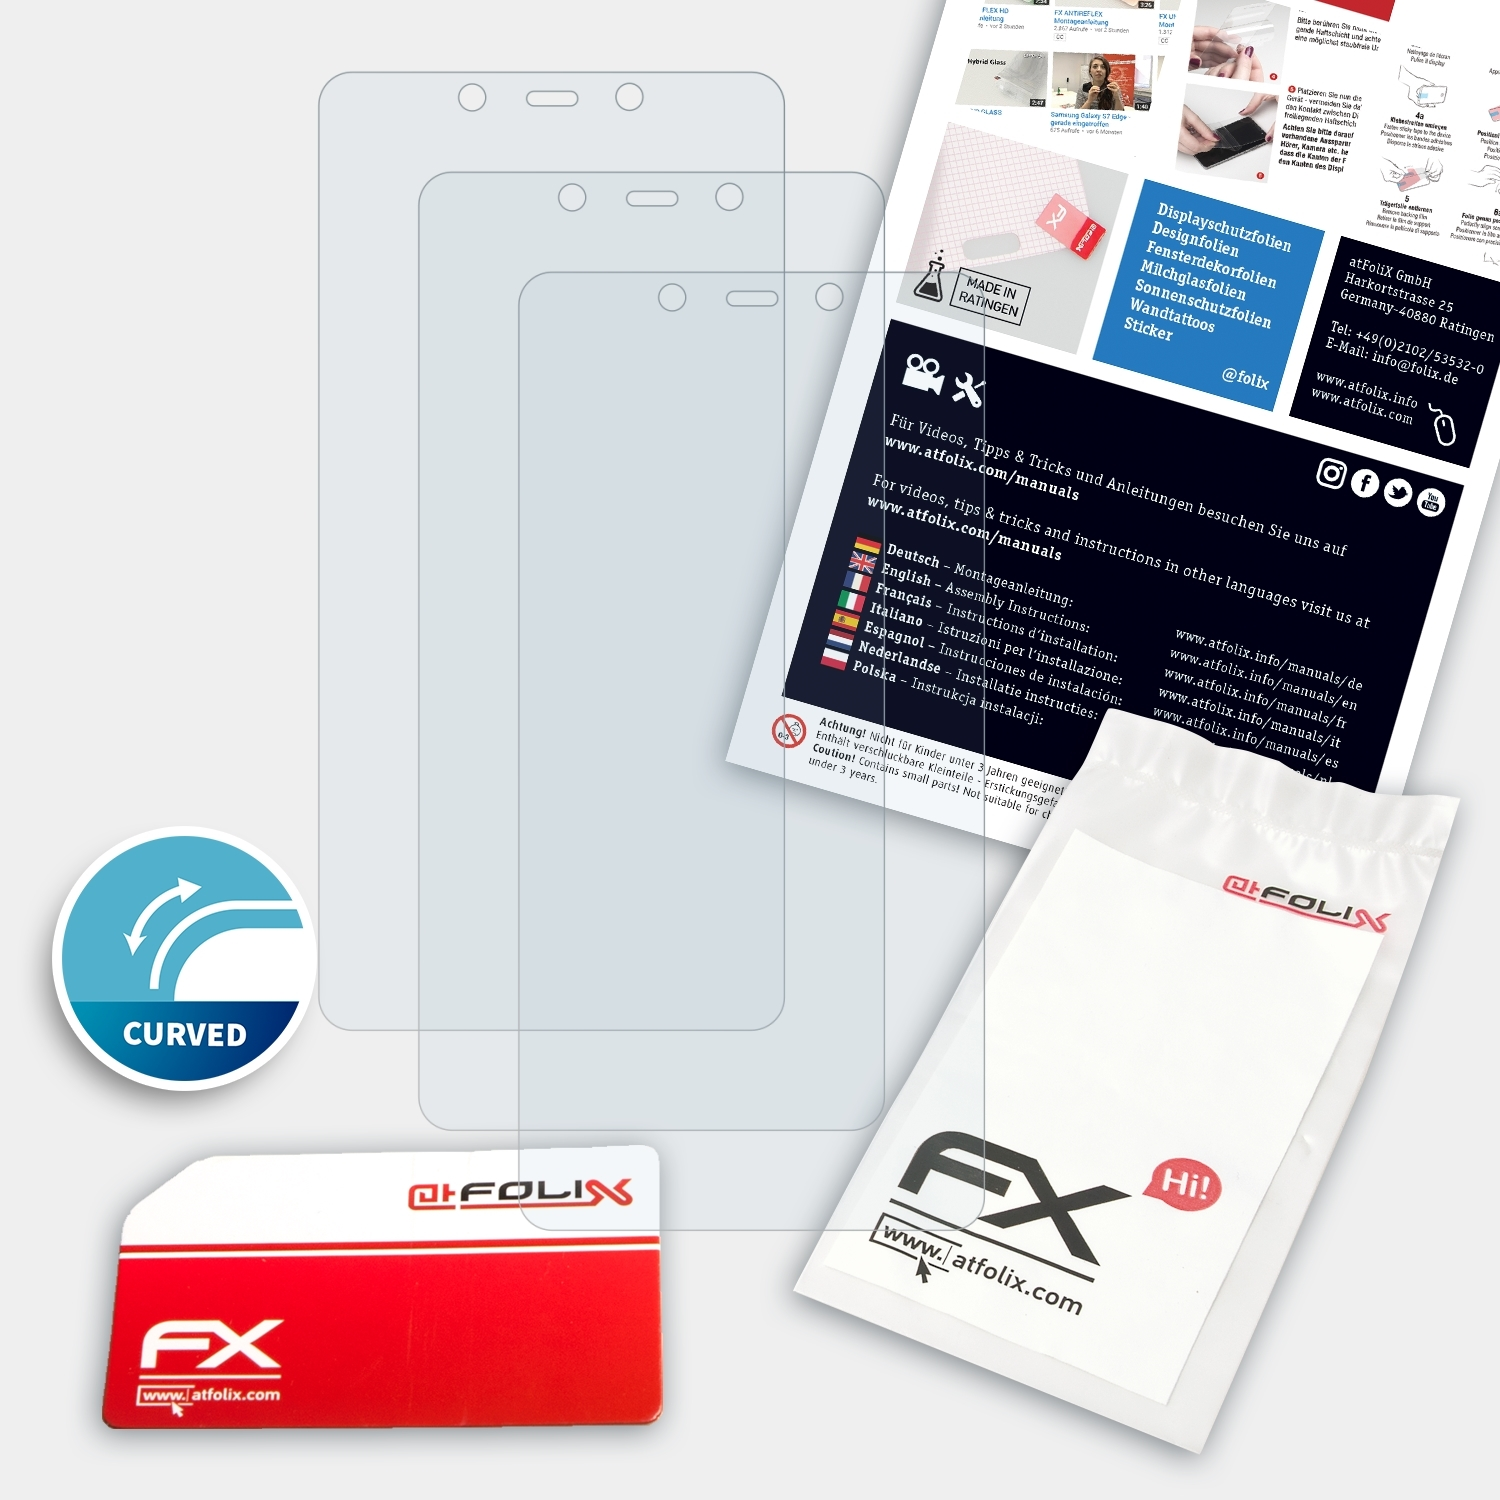 ATFOLIX 3x FX-ActiFleX Mi 8 SE) Xiaomi Displayschutz(für